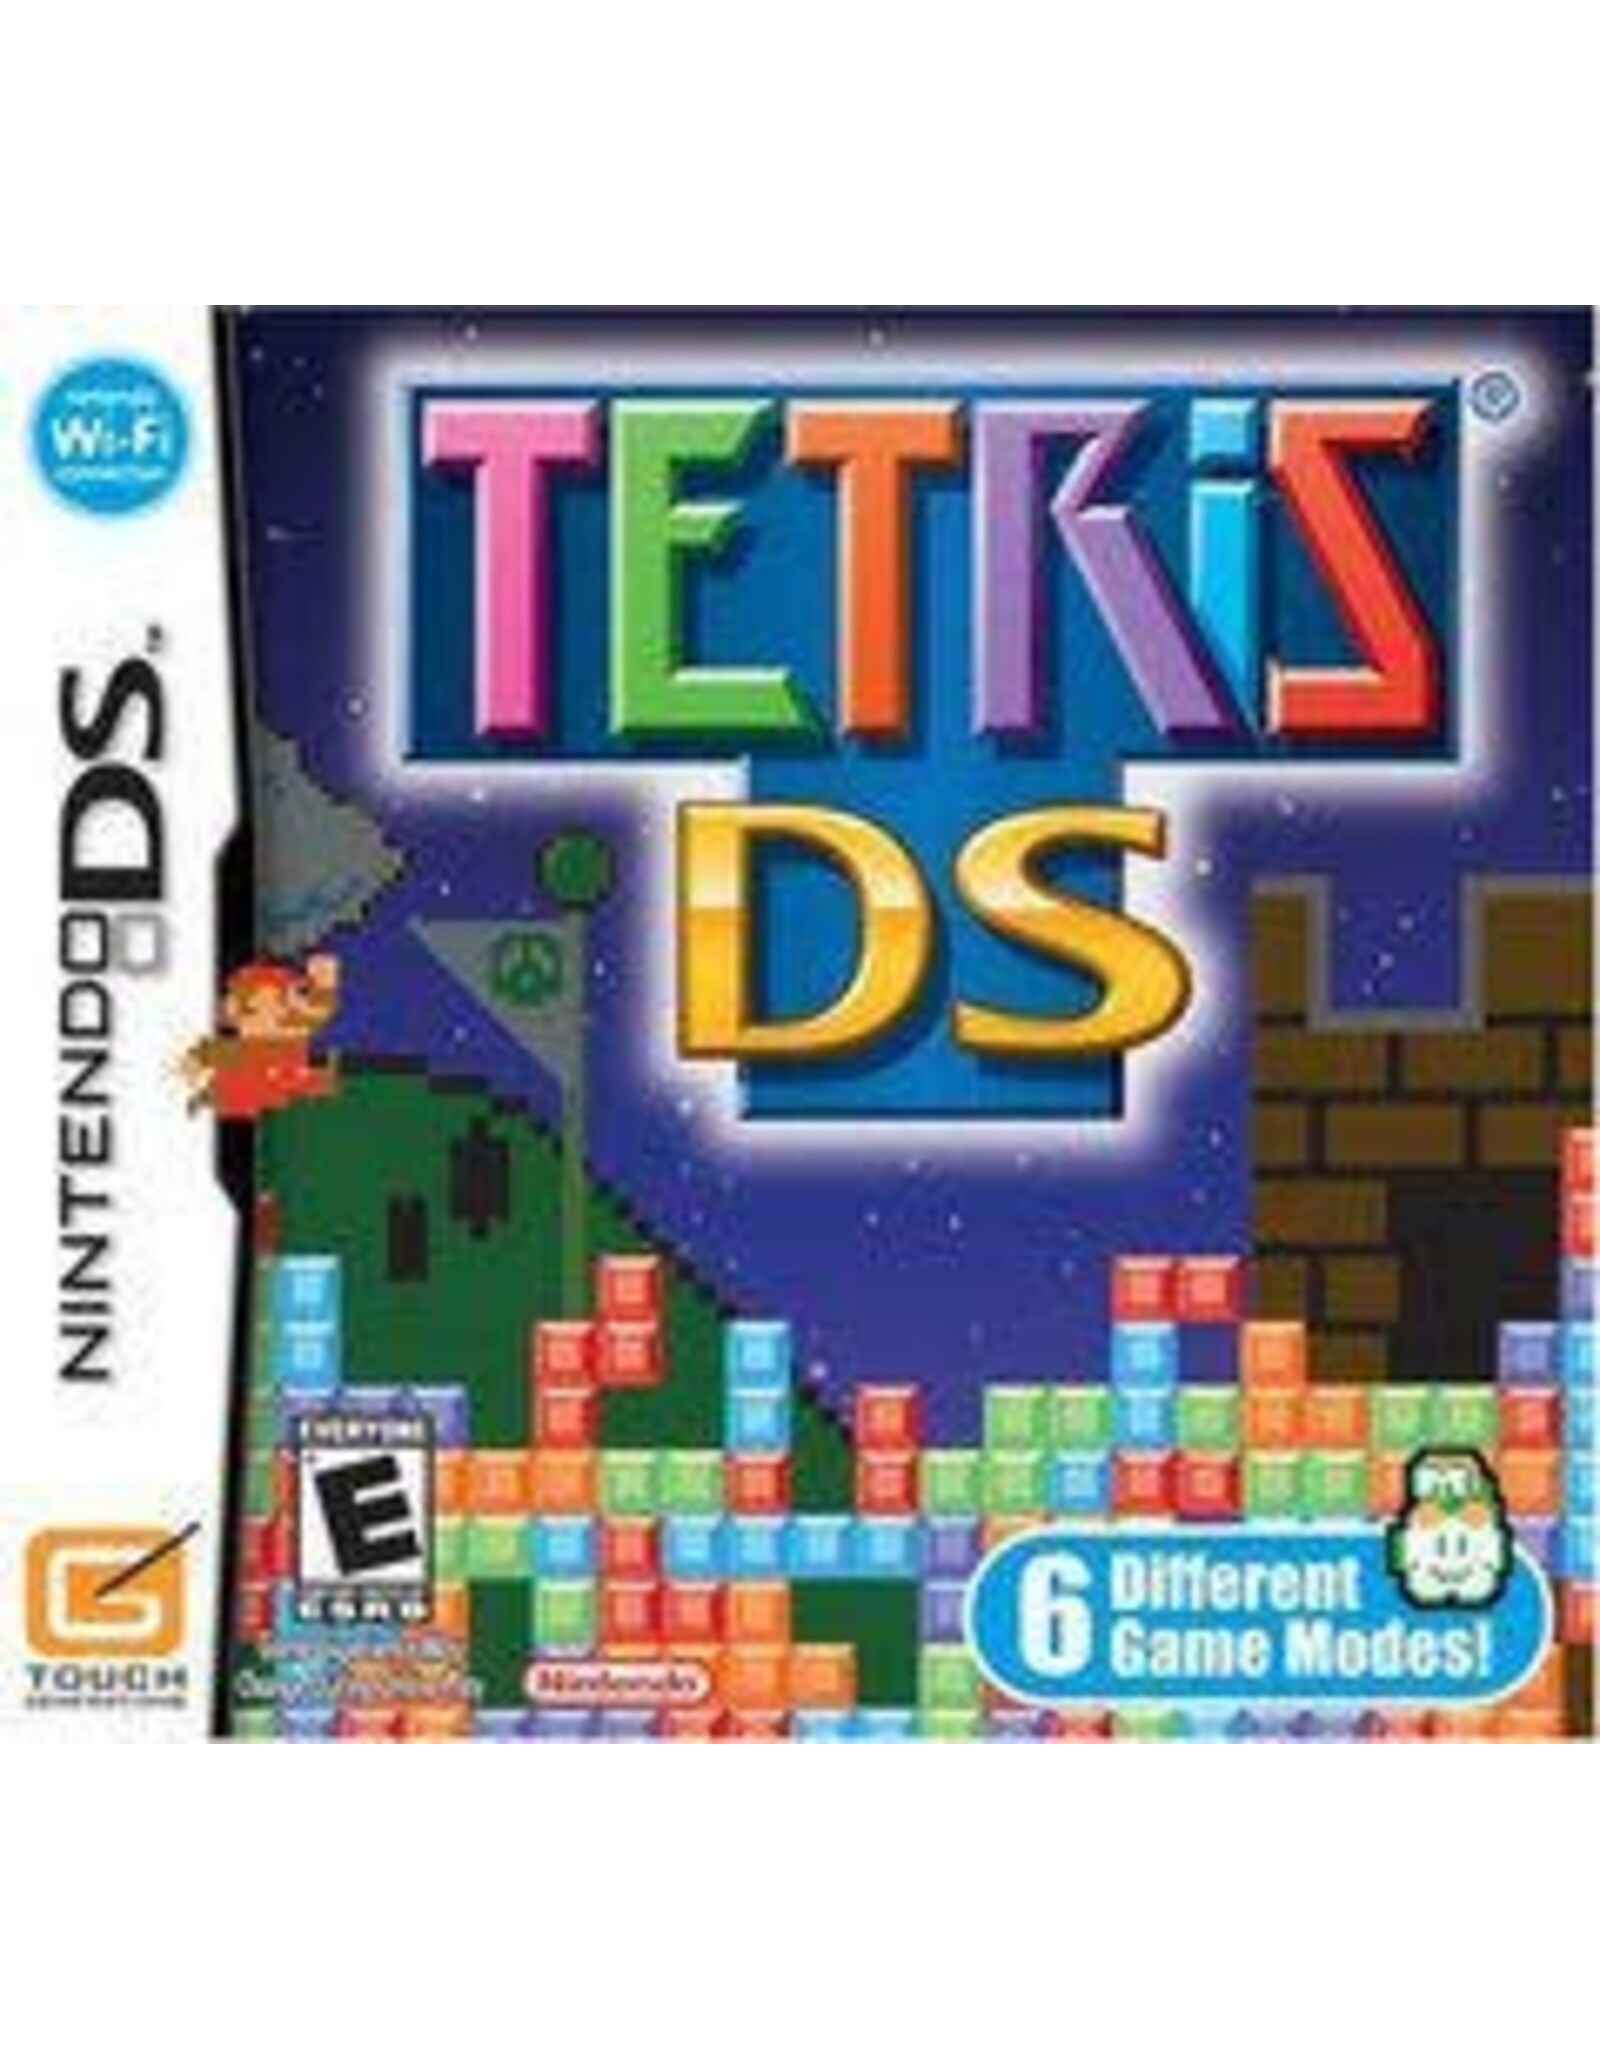 Nintendo DS Tetris DS (Used)